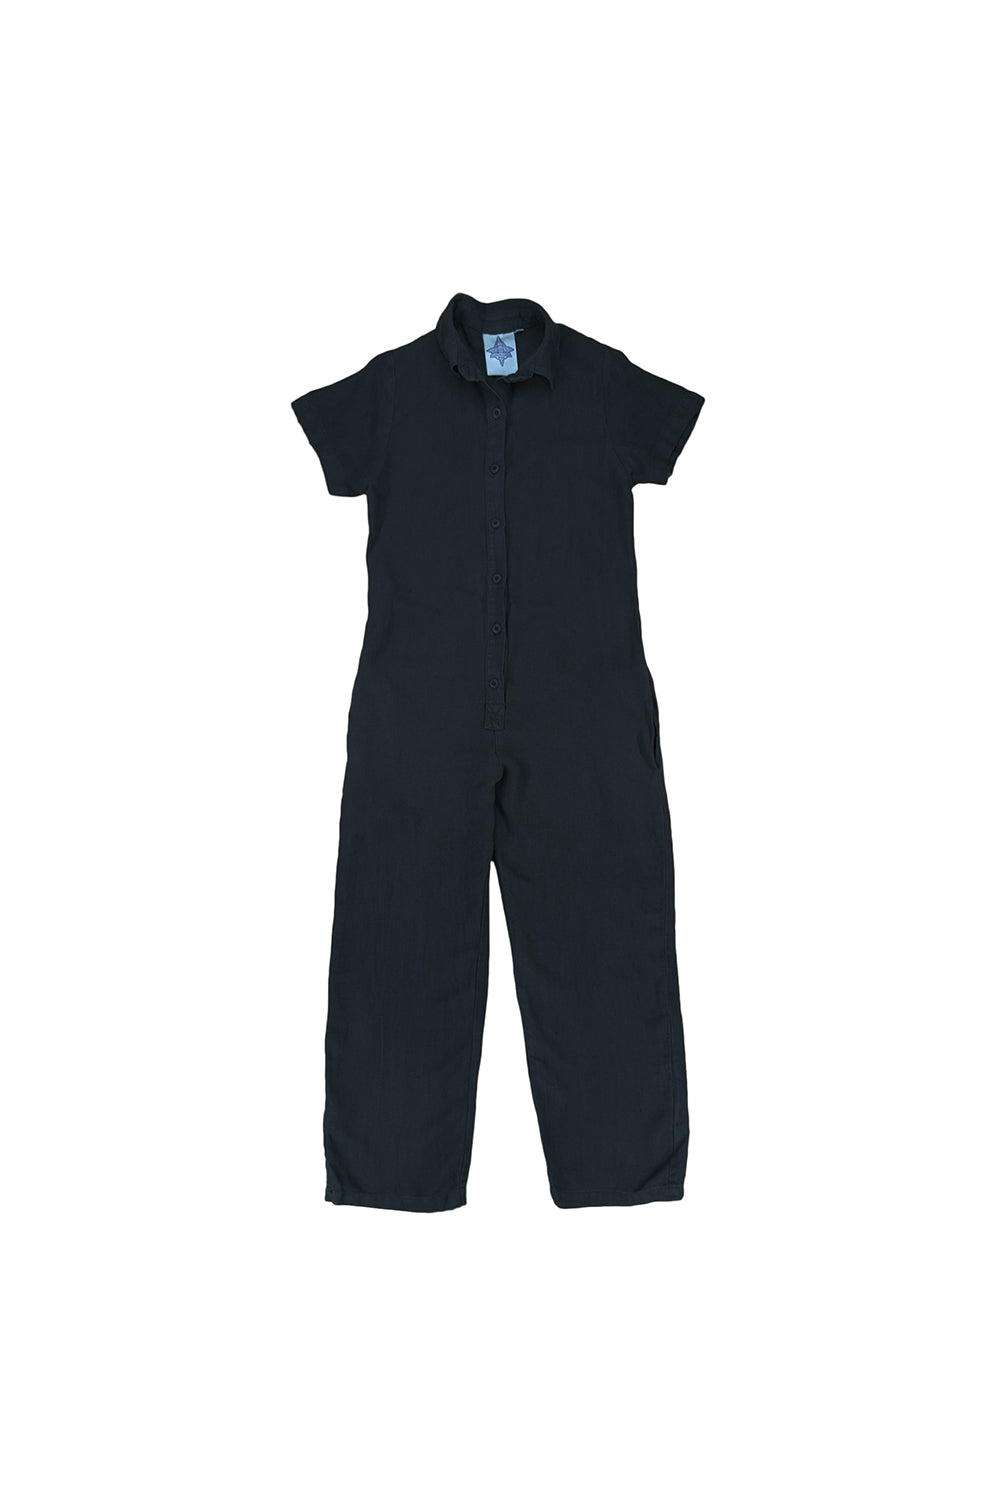 Stillwater Polo Pant Romper | Jungmaven Hemp Clothing & Accessories / Color: Black